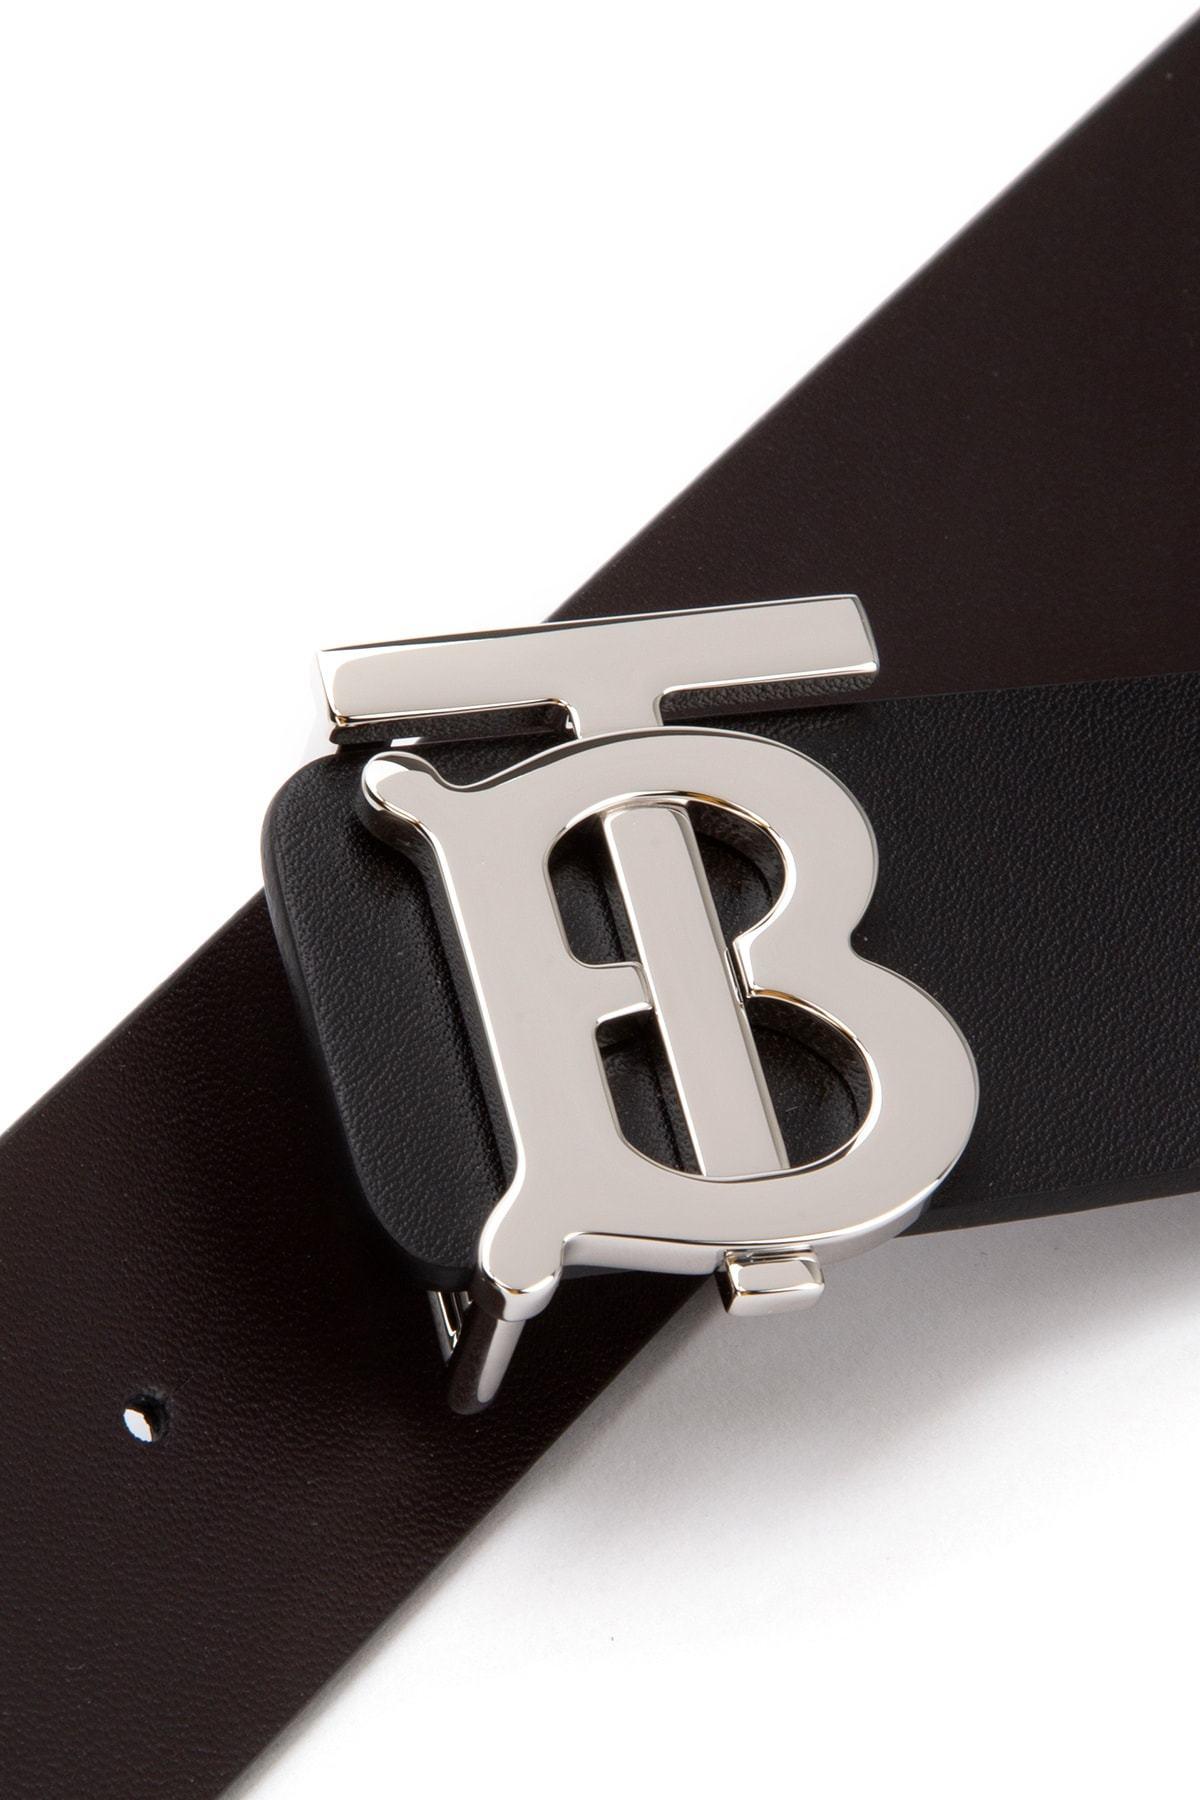 Burberry Leather Reversible Monogram Motif Belt in Black for Men - Lyst